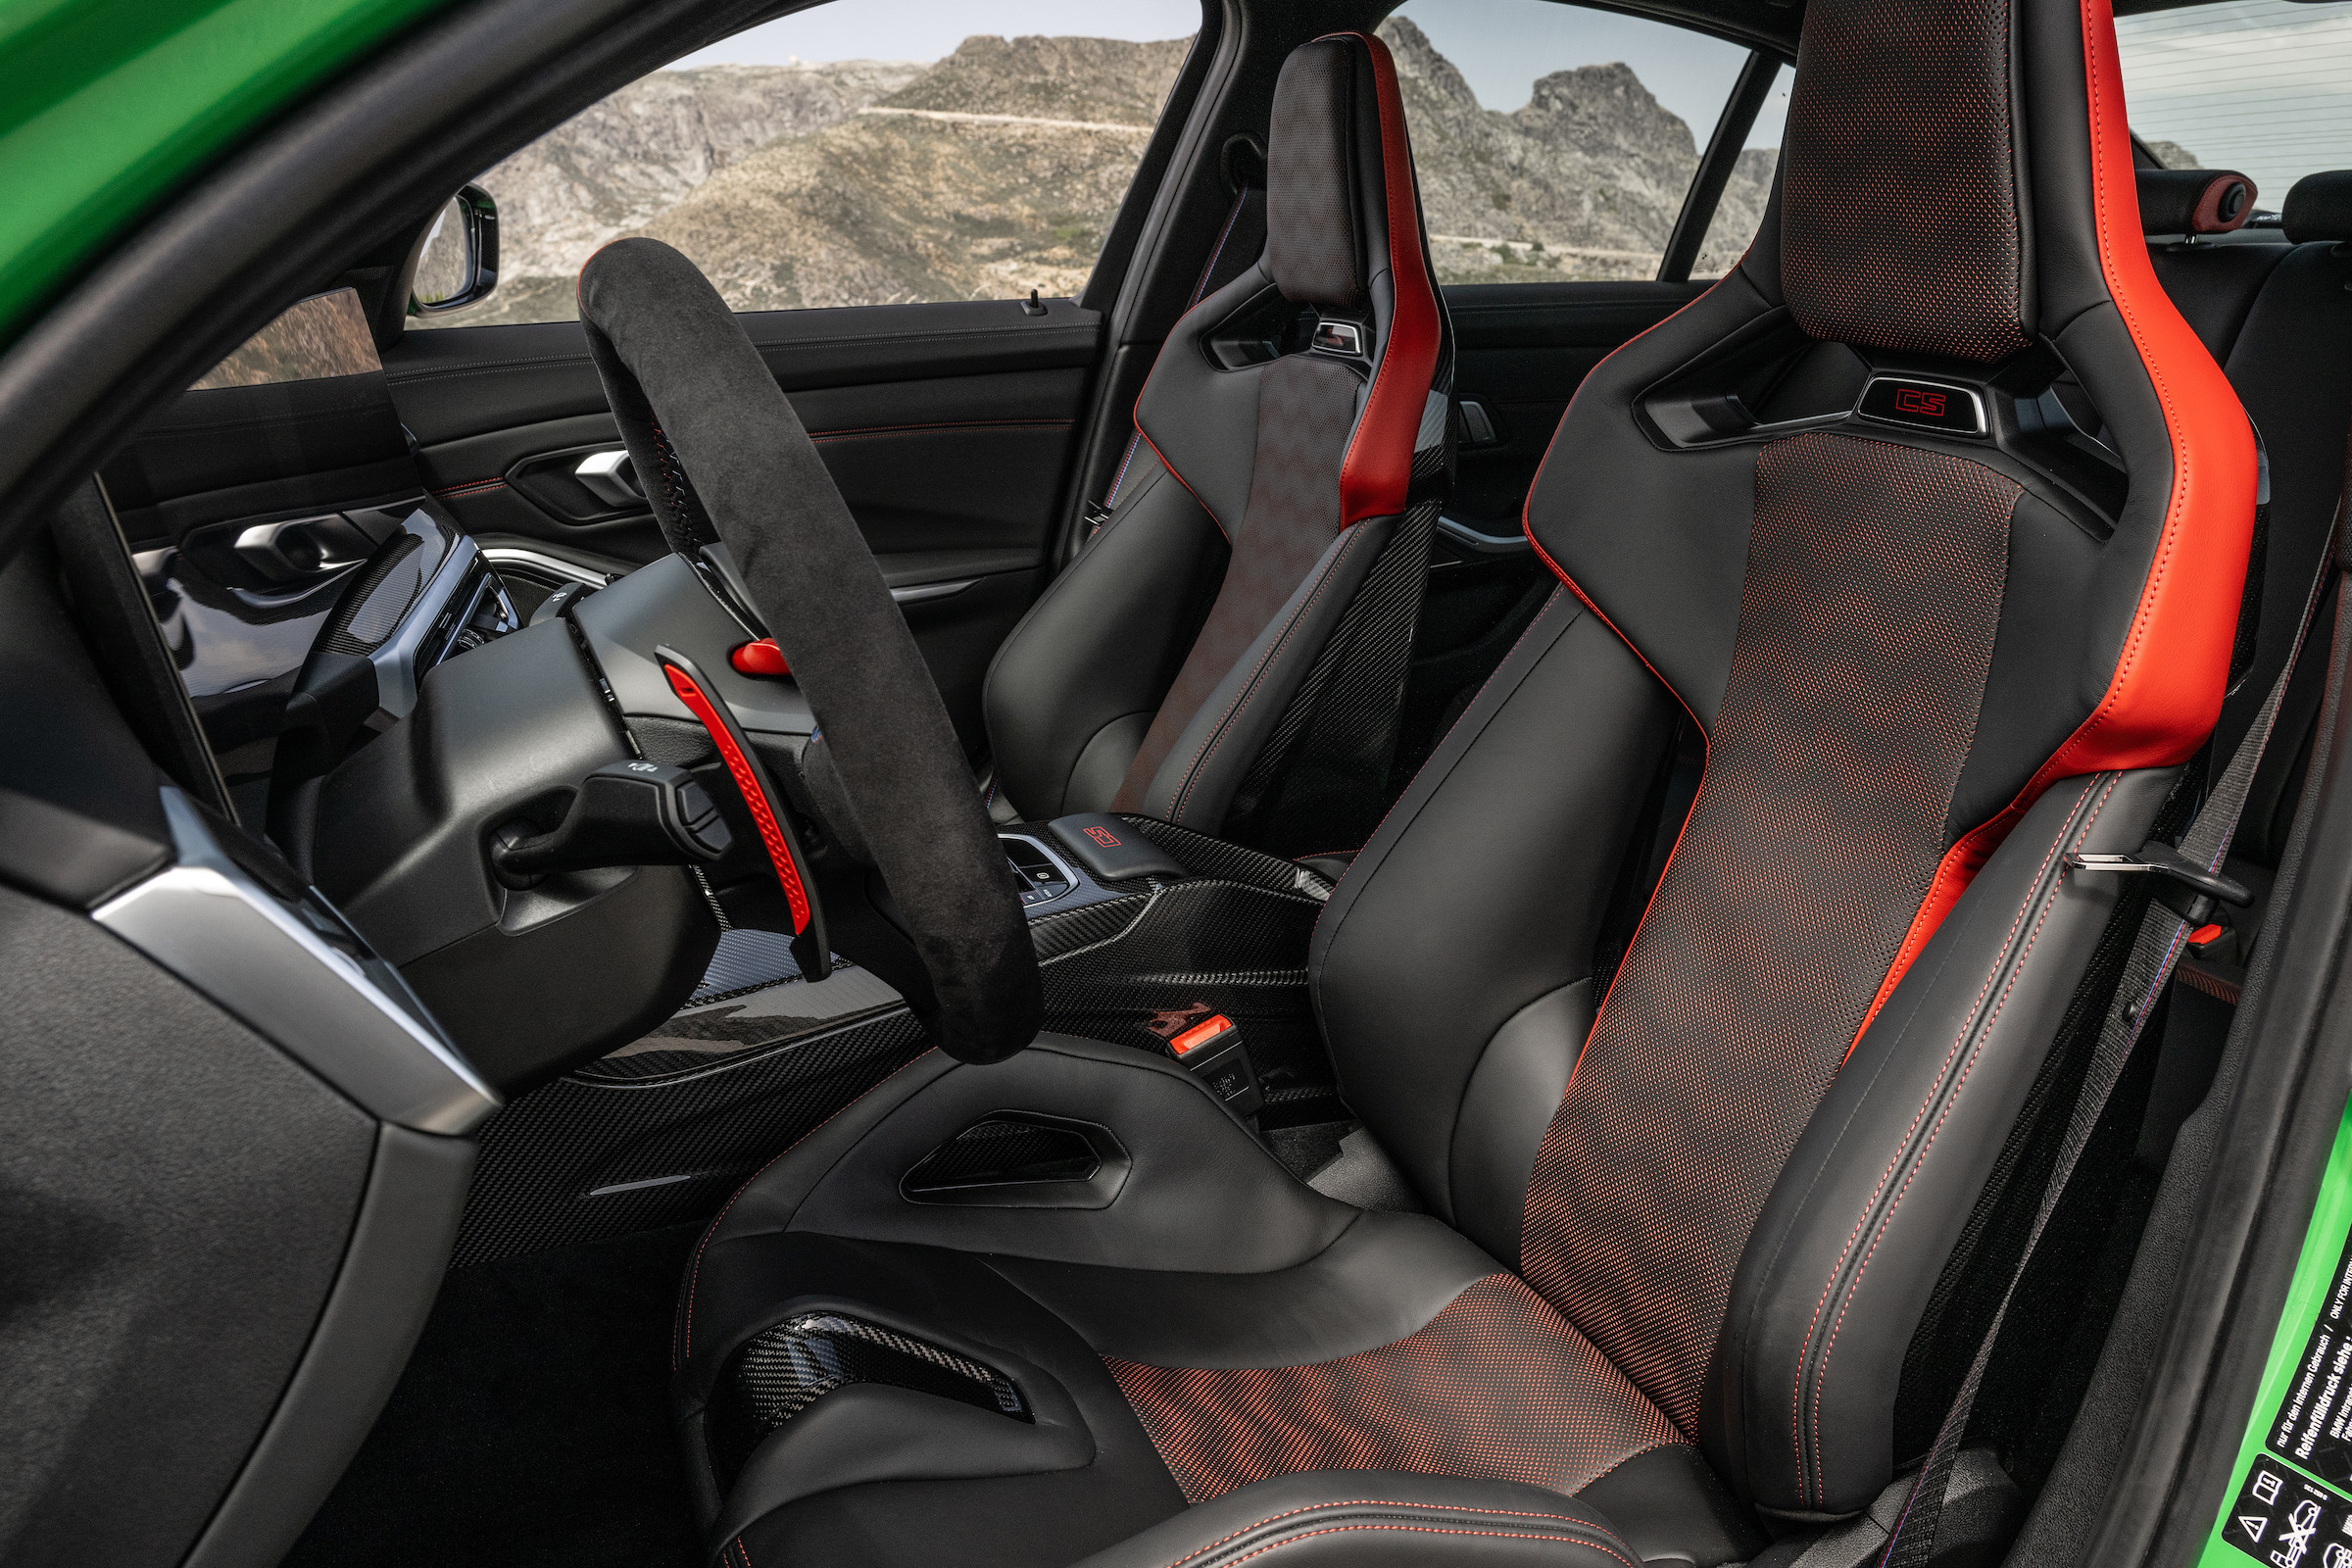 BMW M3 CS seats